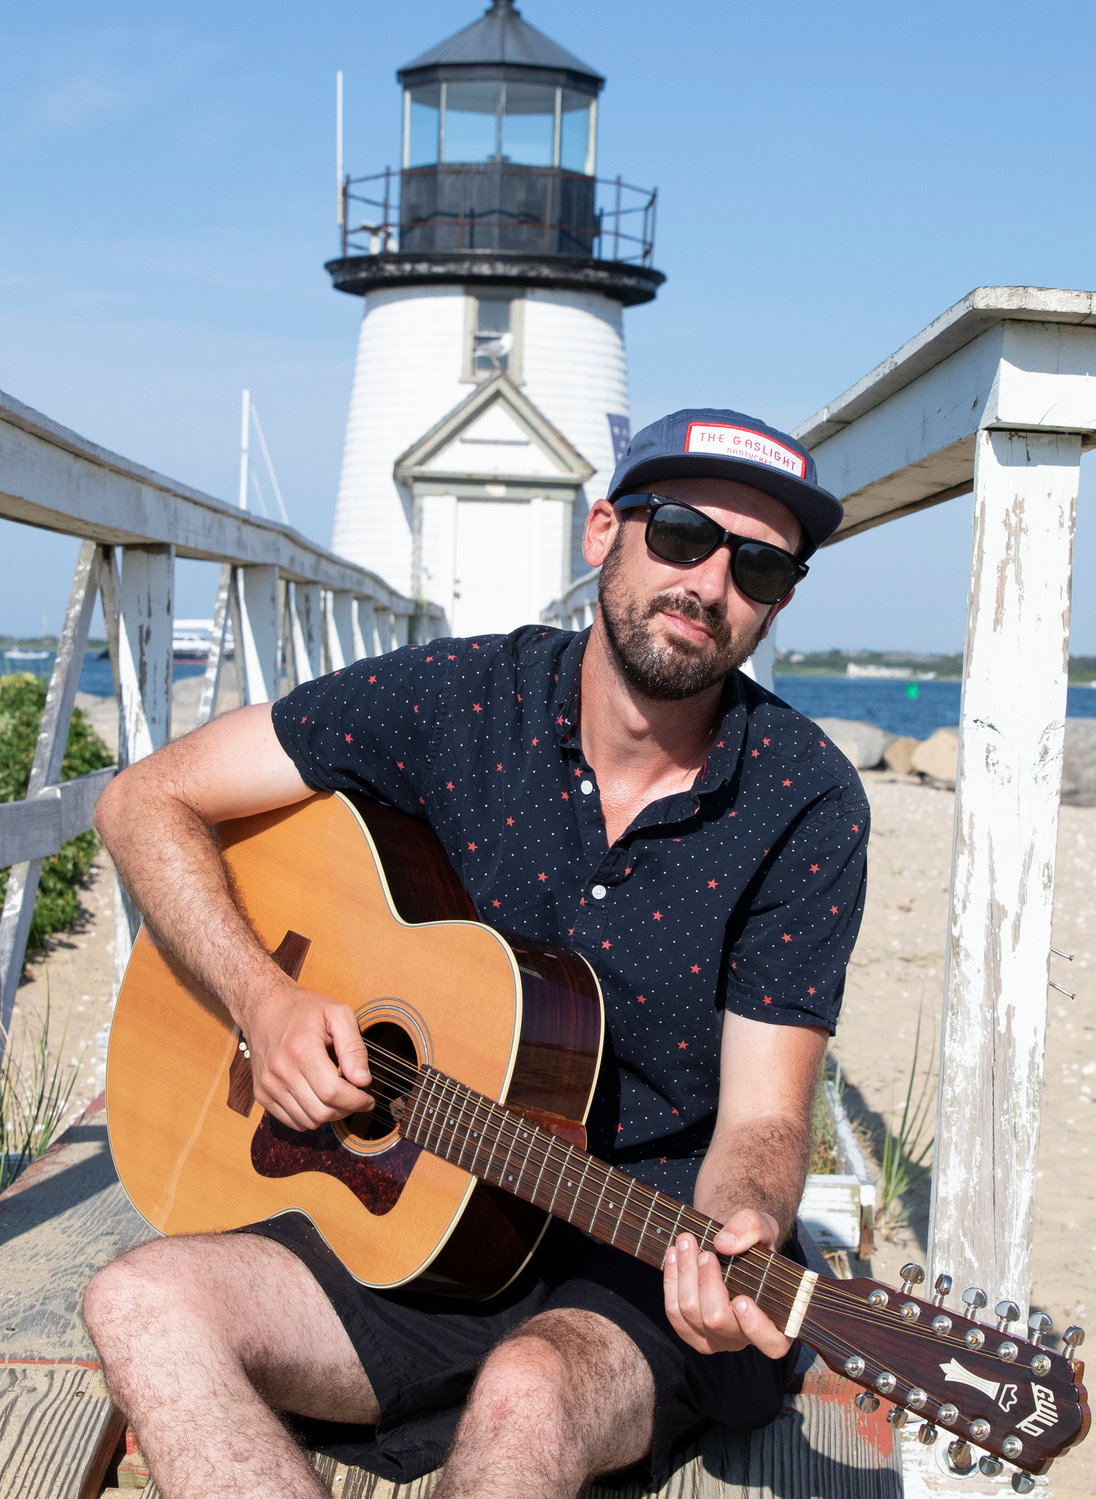 Nantucket singer-songwriter Sean Lee plays venues across the island year-round.